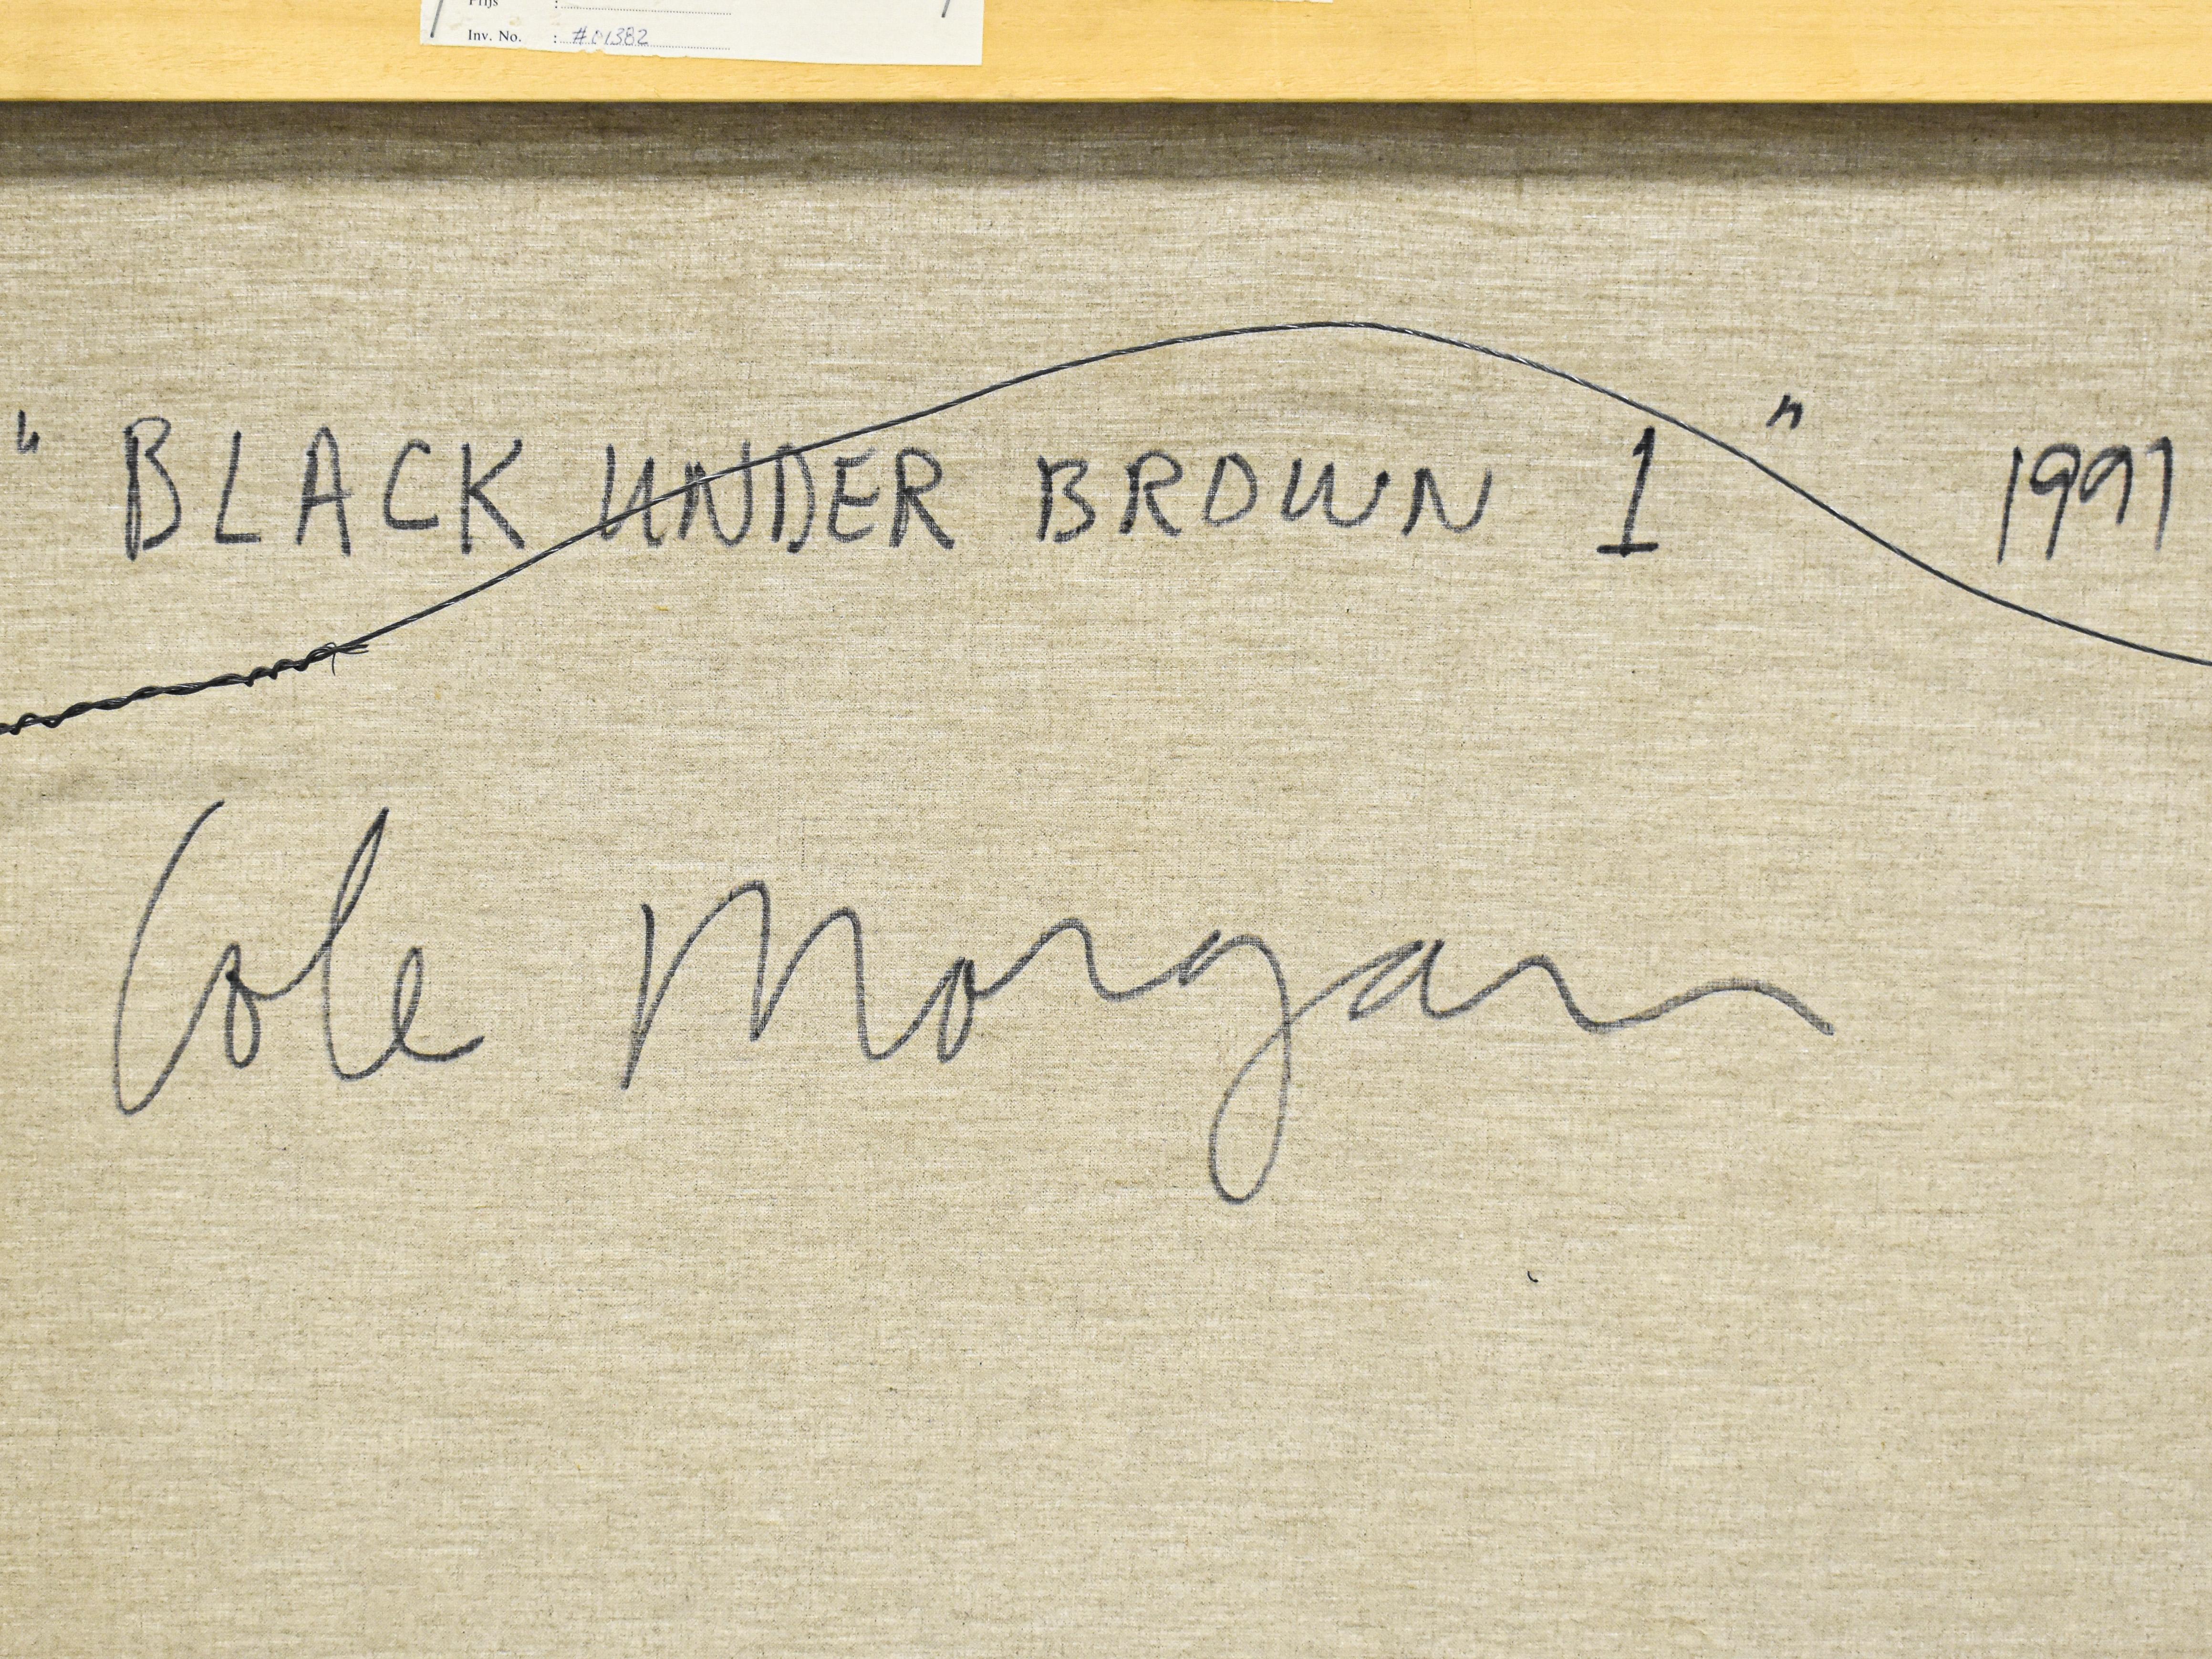 Black Under Brown -  Cole Morgan - Mixed Media on canvas - Original For Sale 10